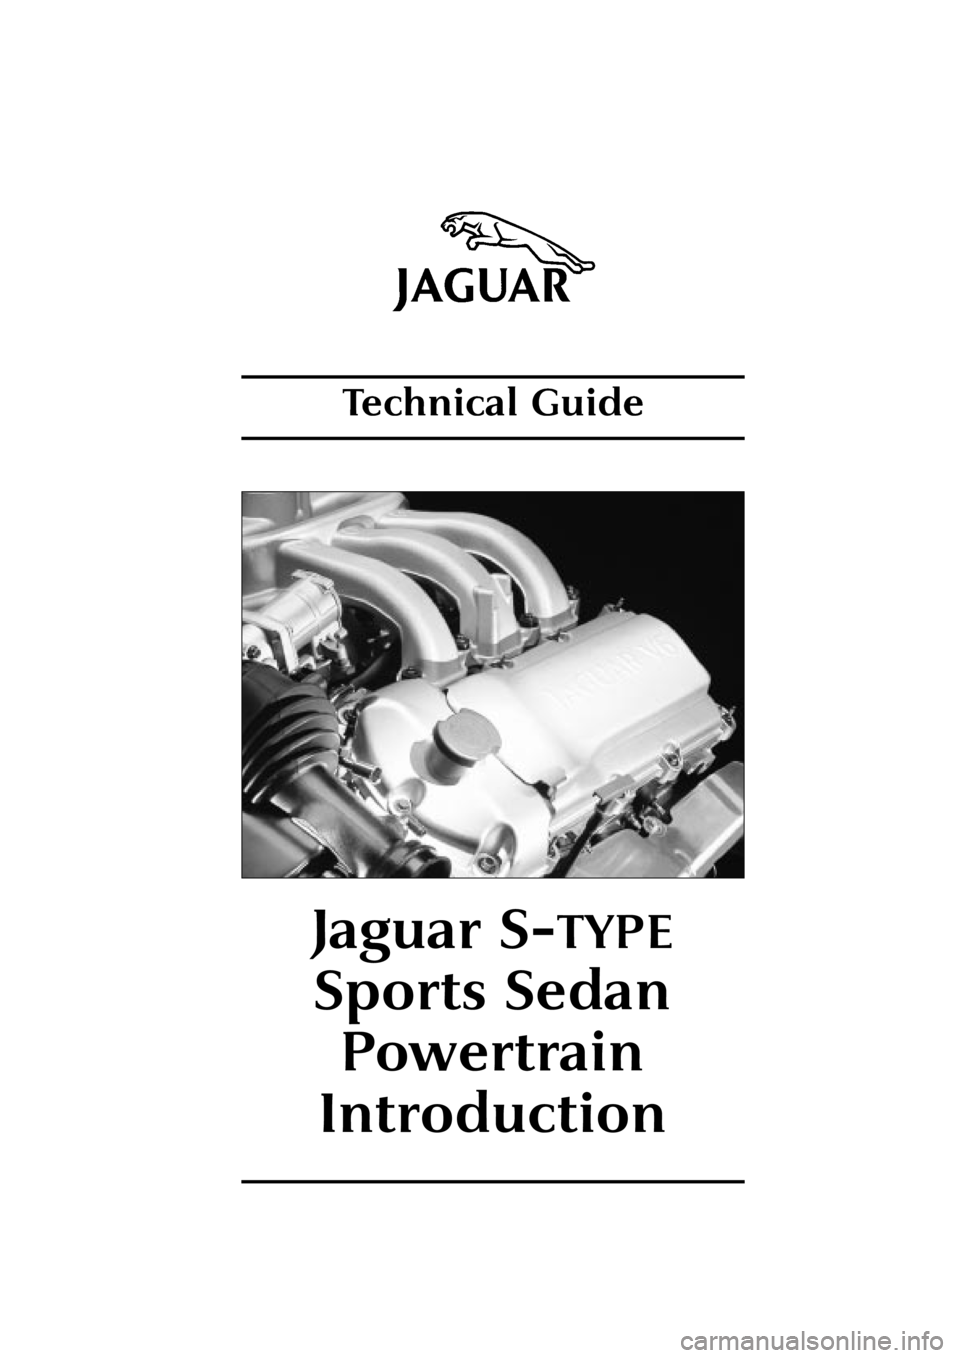 JAGUAR S TYPE 1999 1.G Powertrain Manual Technical Guide
Jaguar S-TYPE
Sports Sedan
Powertrain
Introduction 